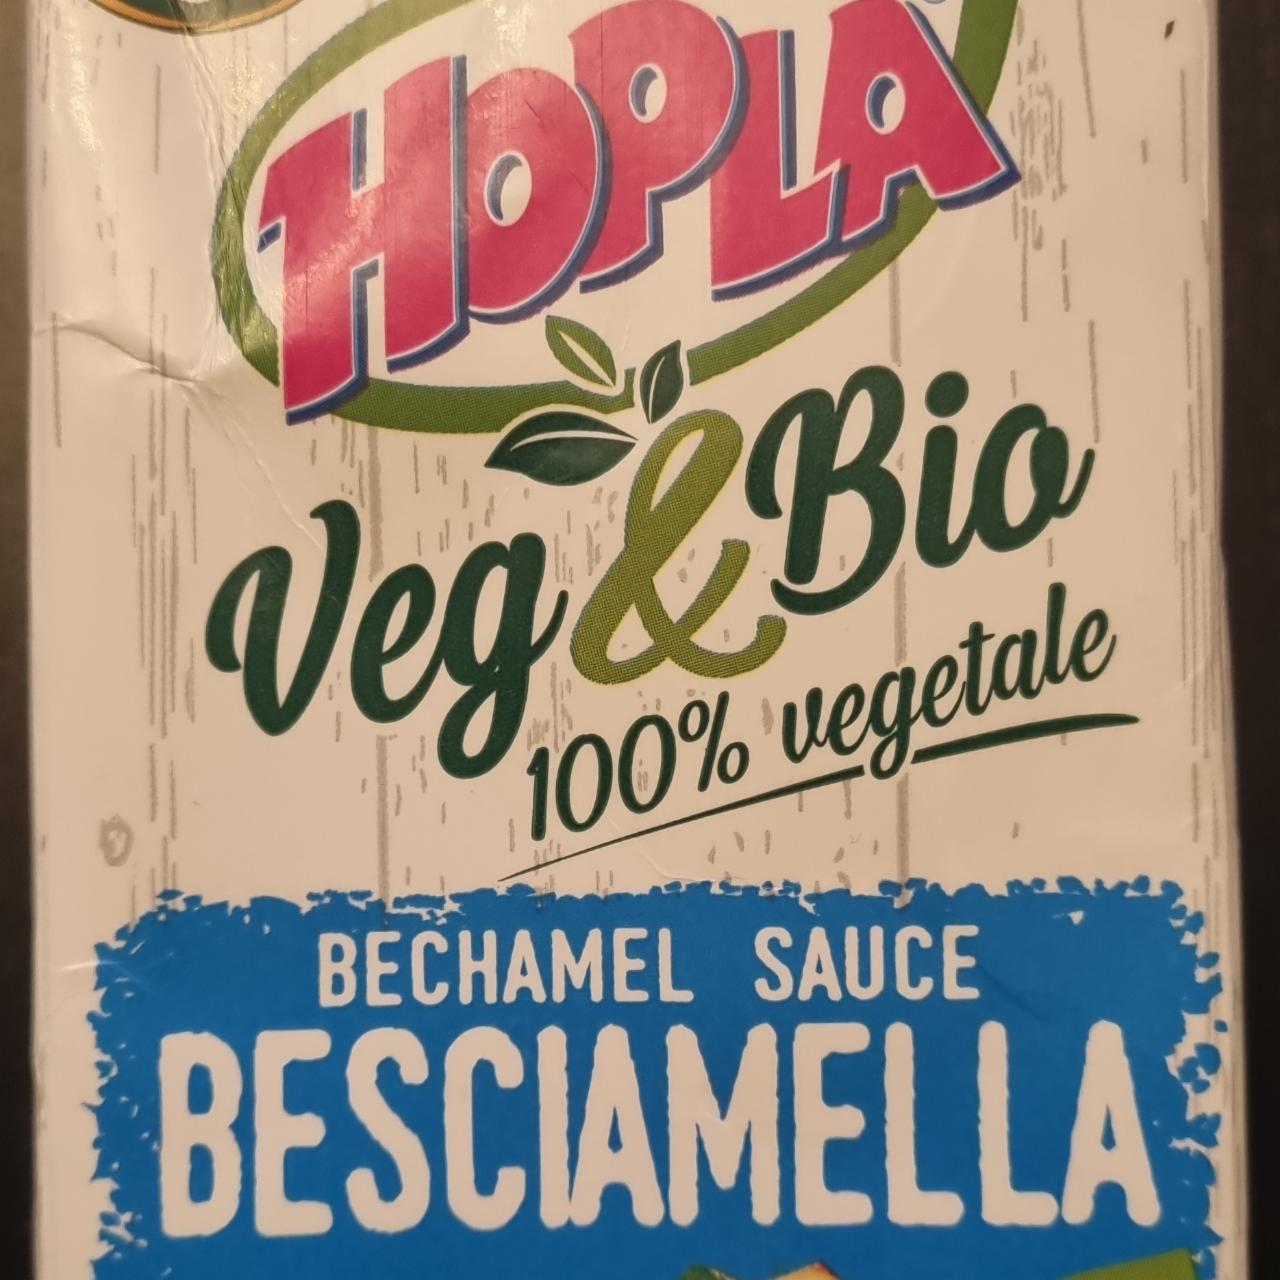 Fotografie - Bechamel Veg&Bio 100% vegetale Hoplá